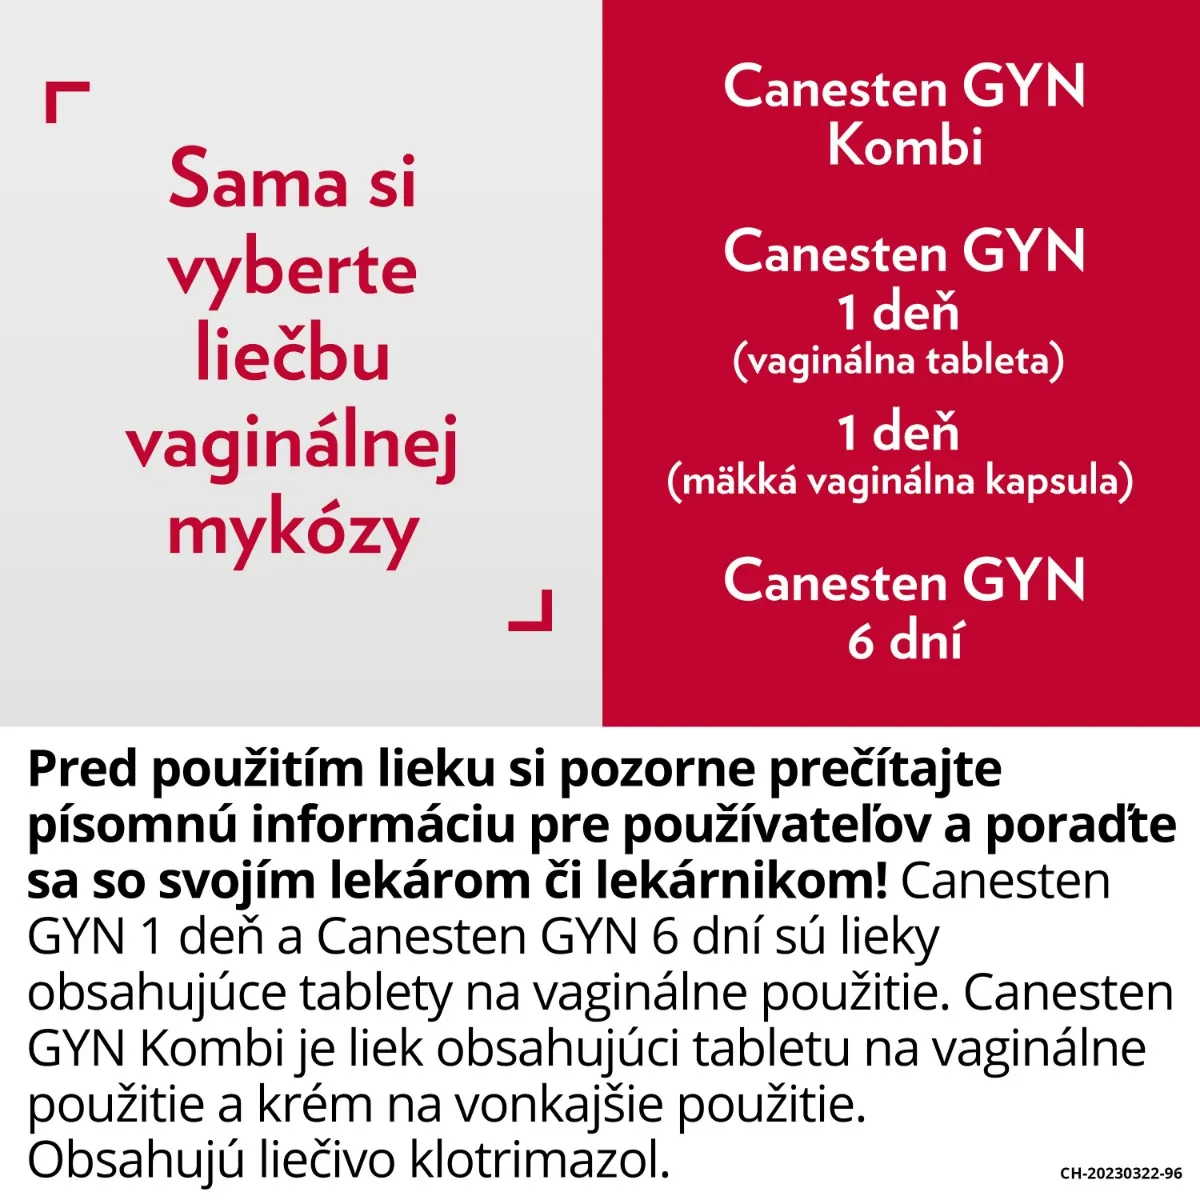 Canesten GYN 6 dní 1×6 tbl, liek na vaginálnu kvasinkovú infekciu